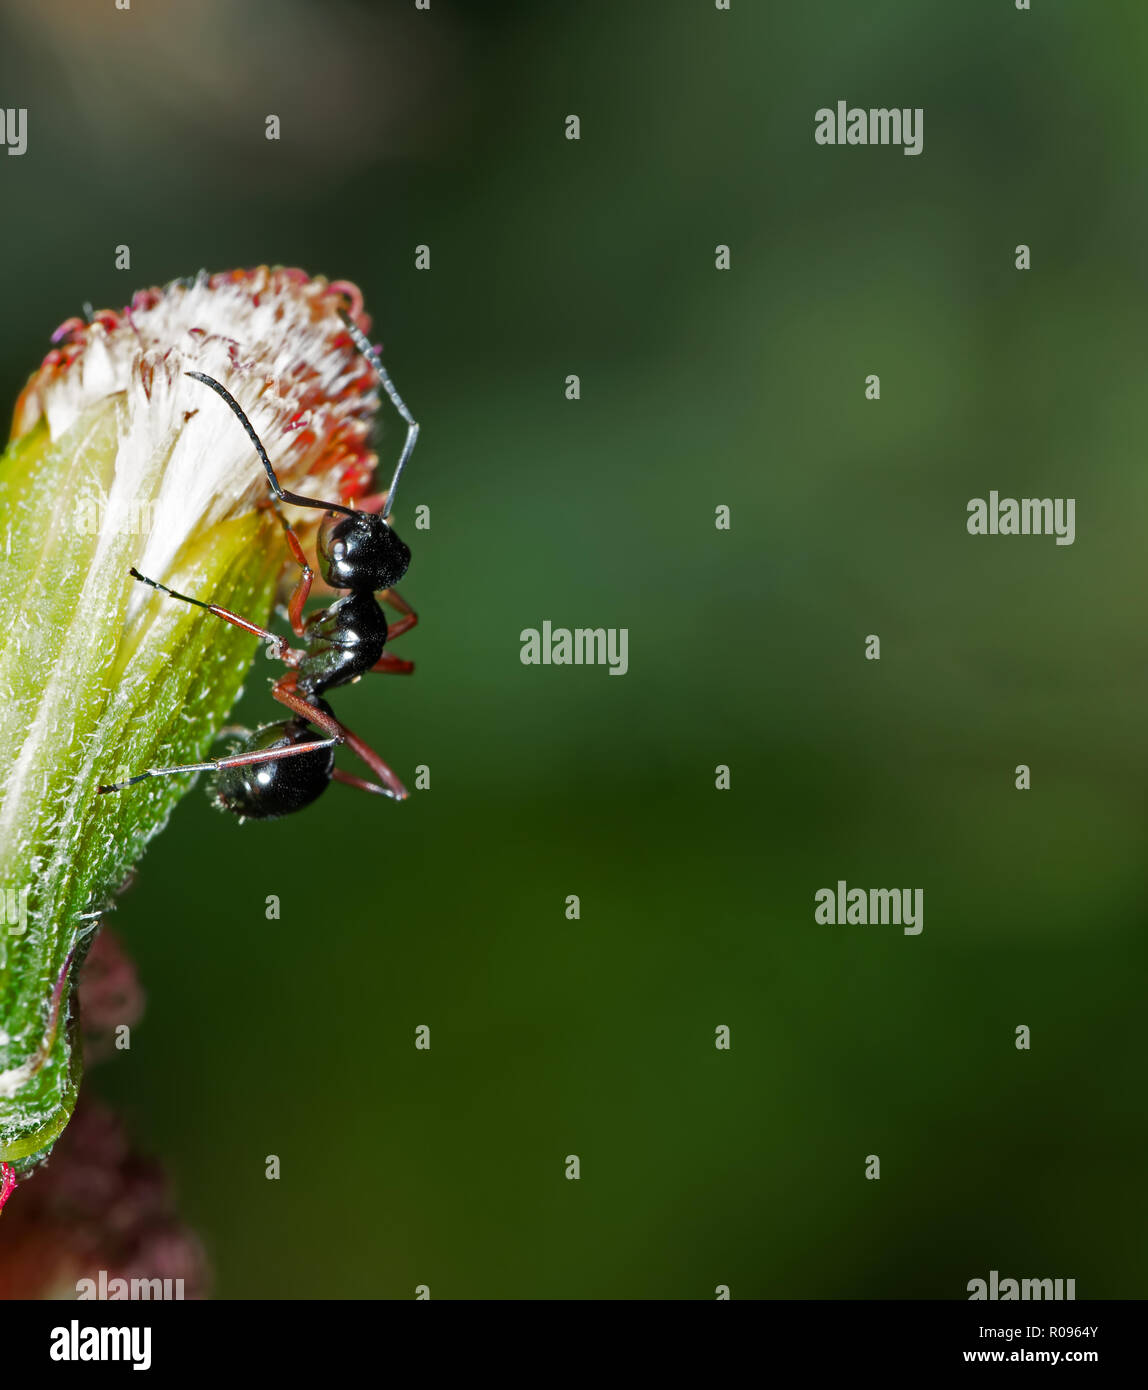 Macro Photography of Black Ant on Flower Bud Isolated on Blurry Background Stock Photo